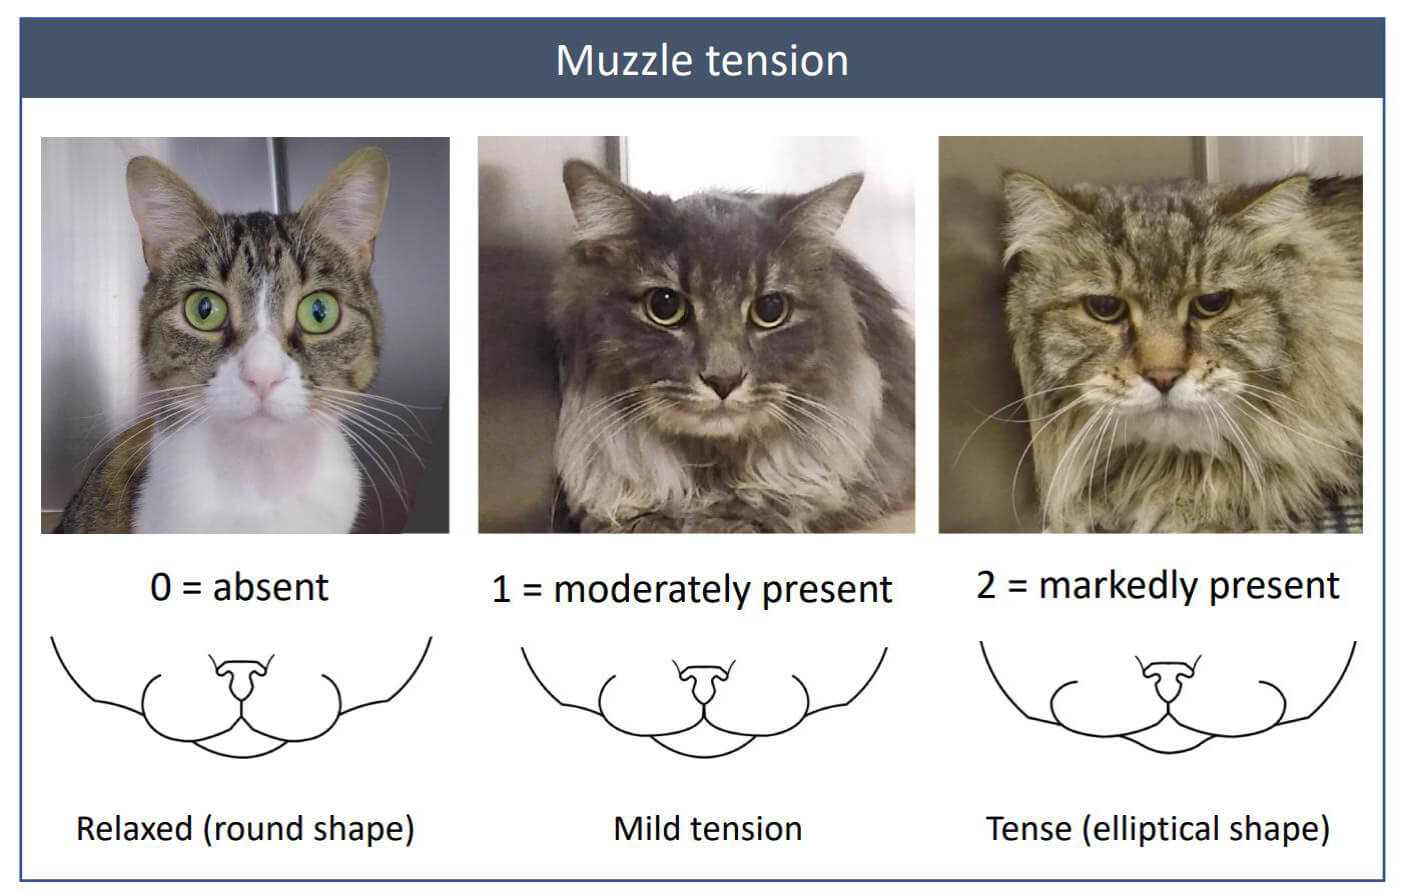 Feline muzzle tension